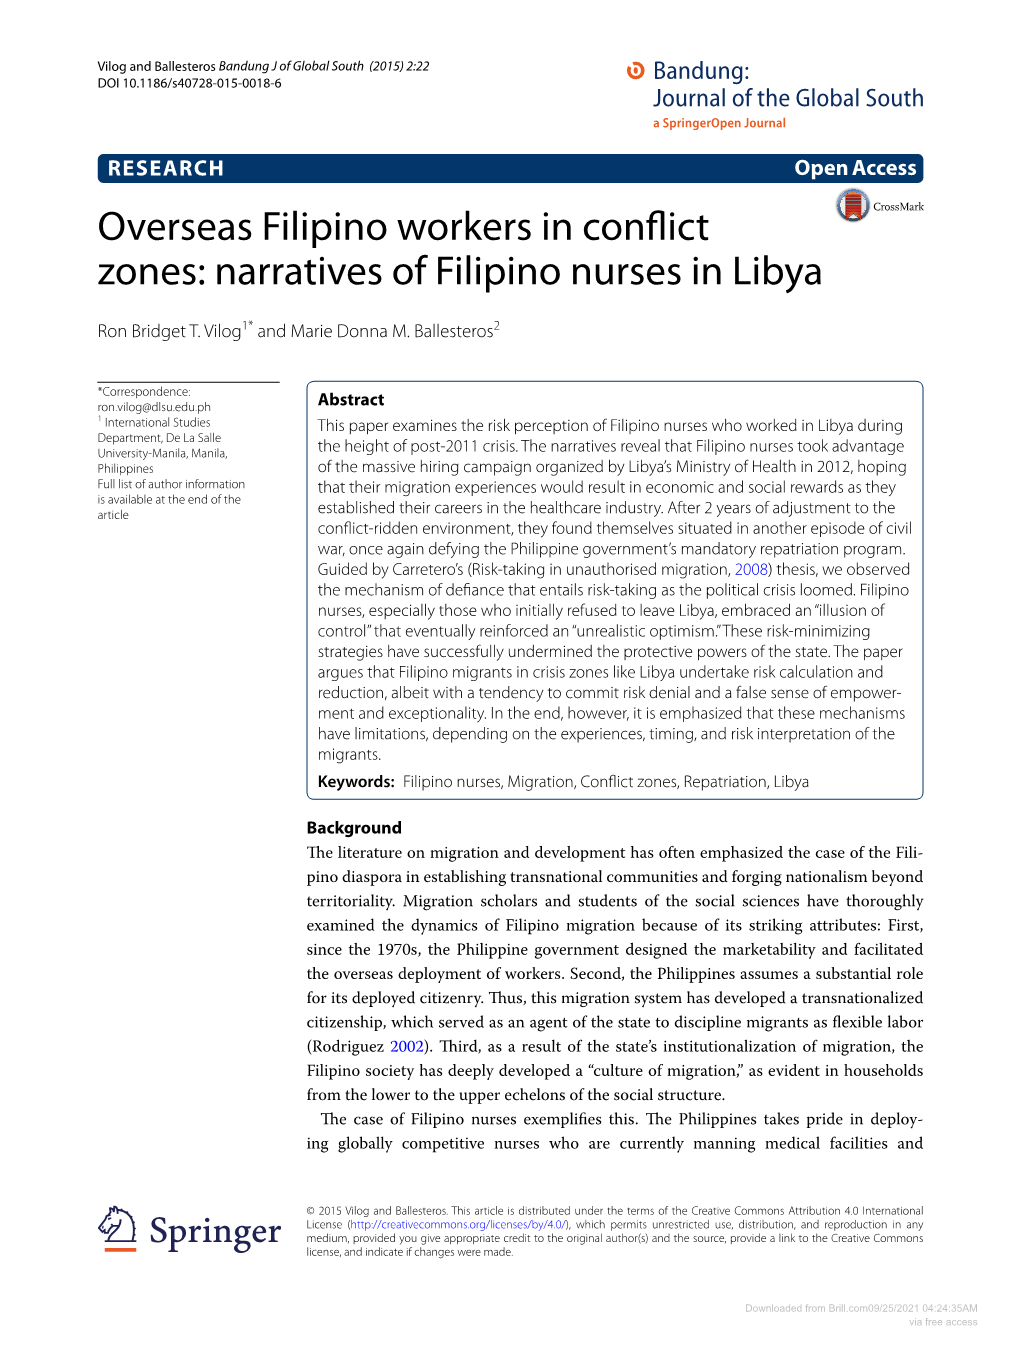 Narratives of Filipino Nurses in Libya